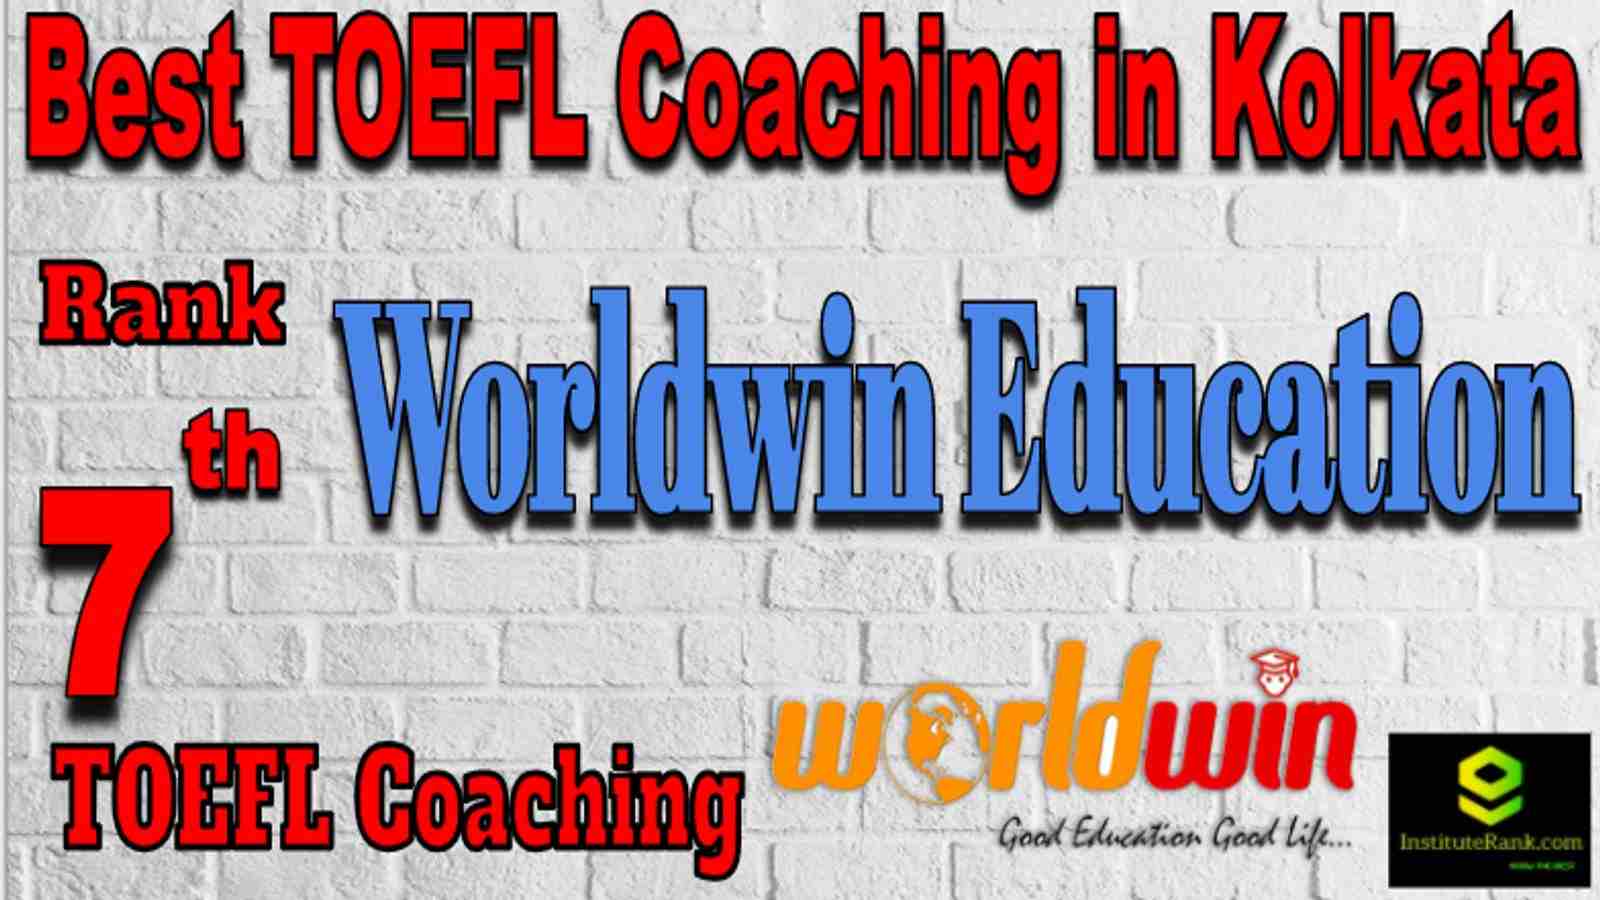 Rank 7 Best TOEFL Coaching in Kolkata